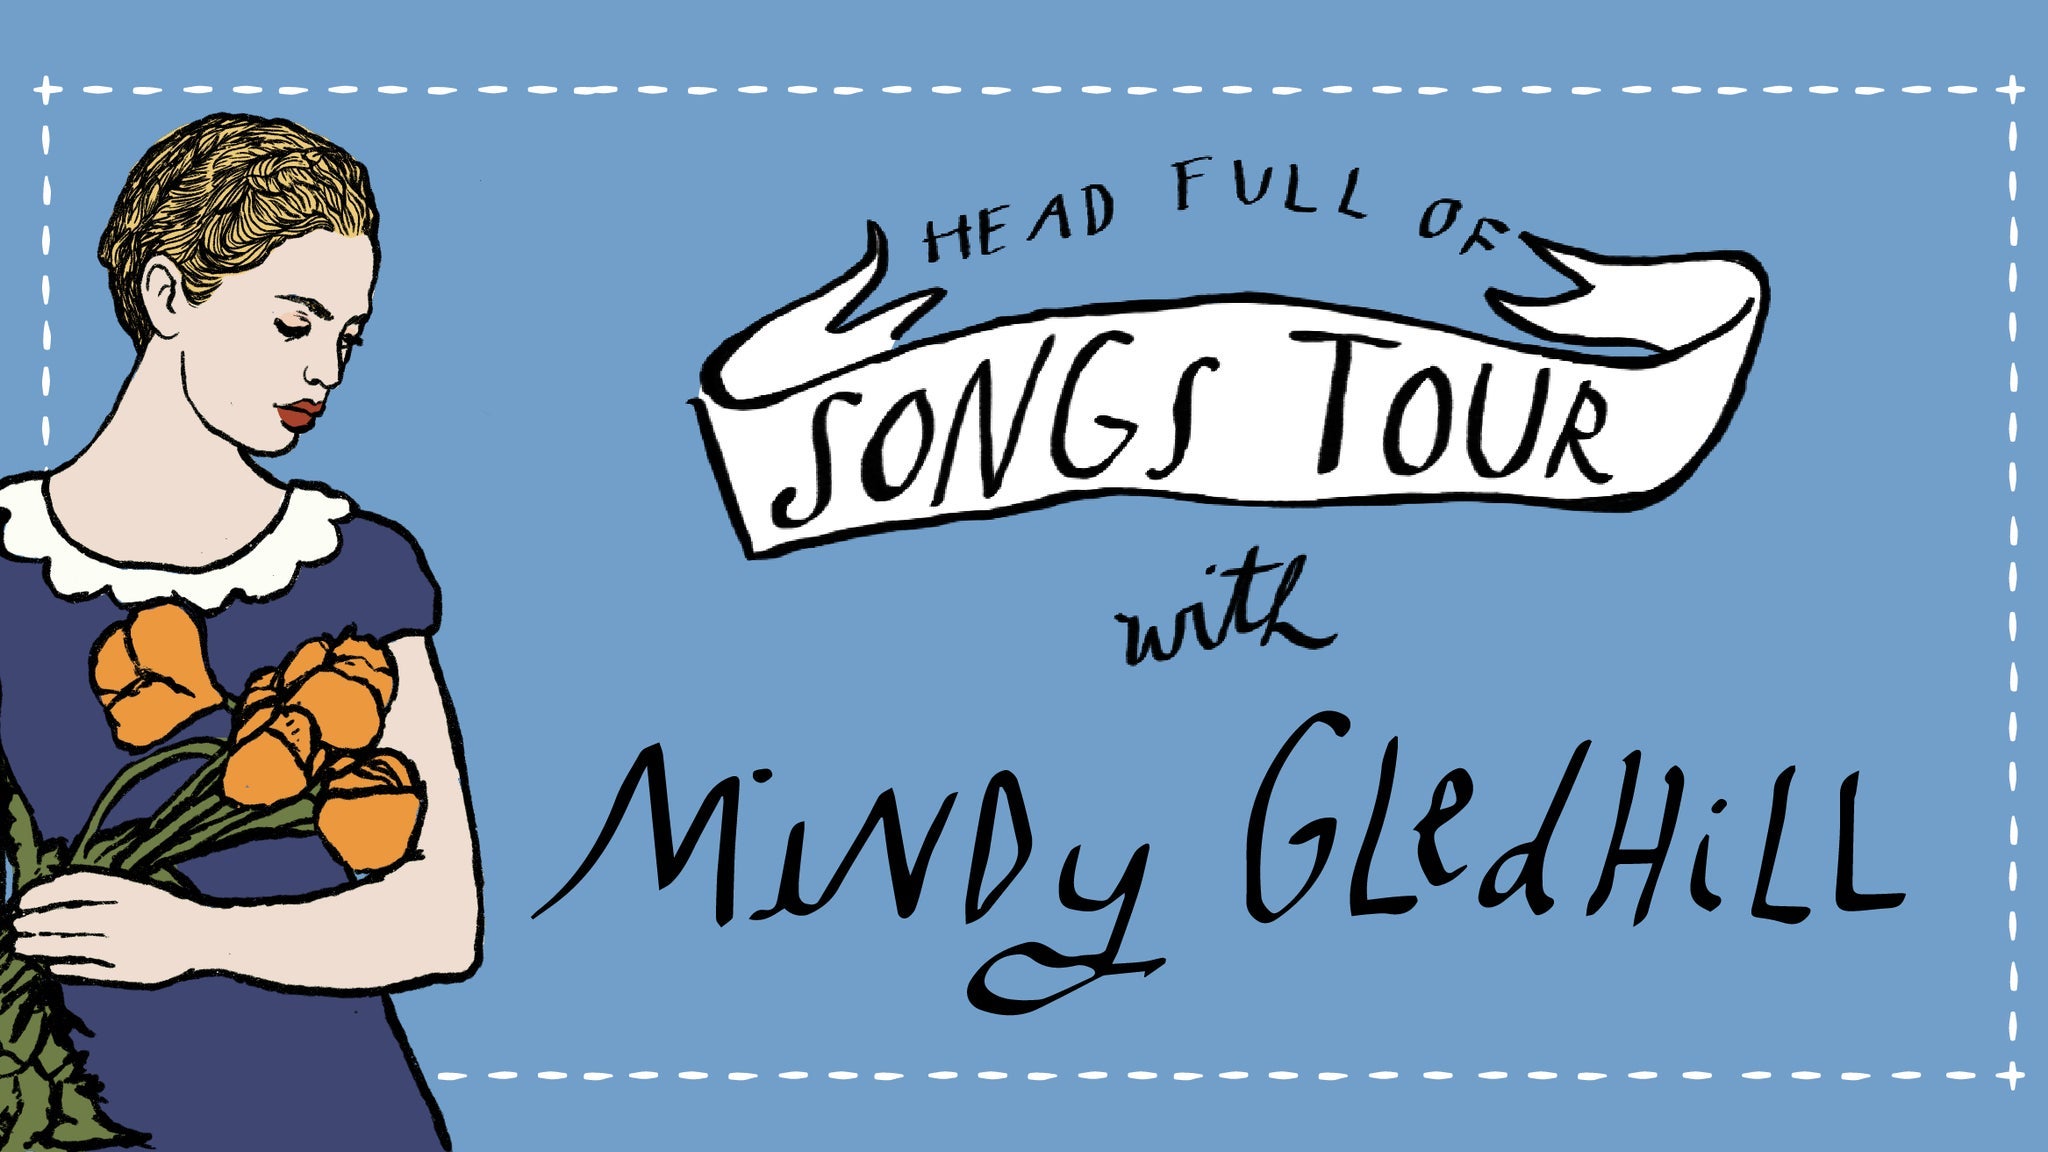 Mindy Gledhill: Head Full of Songs Tour